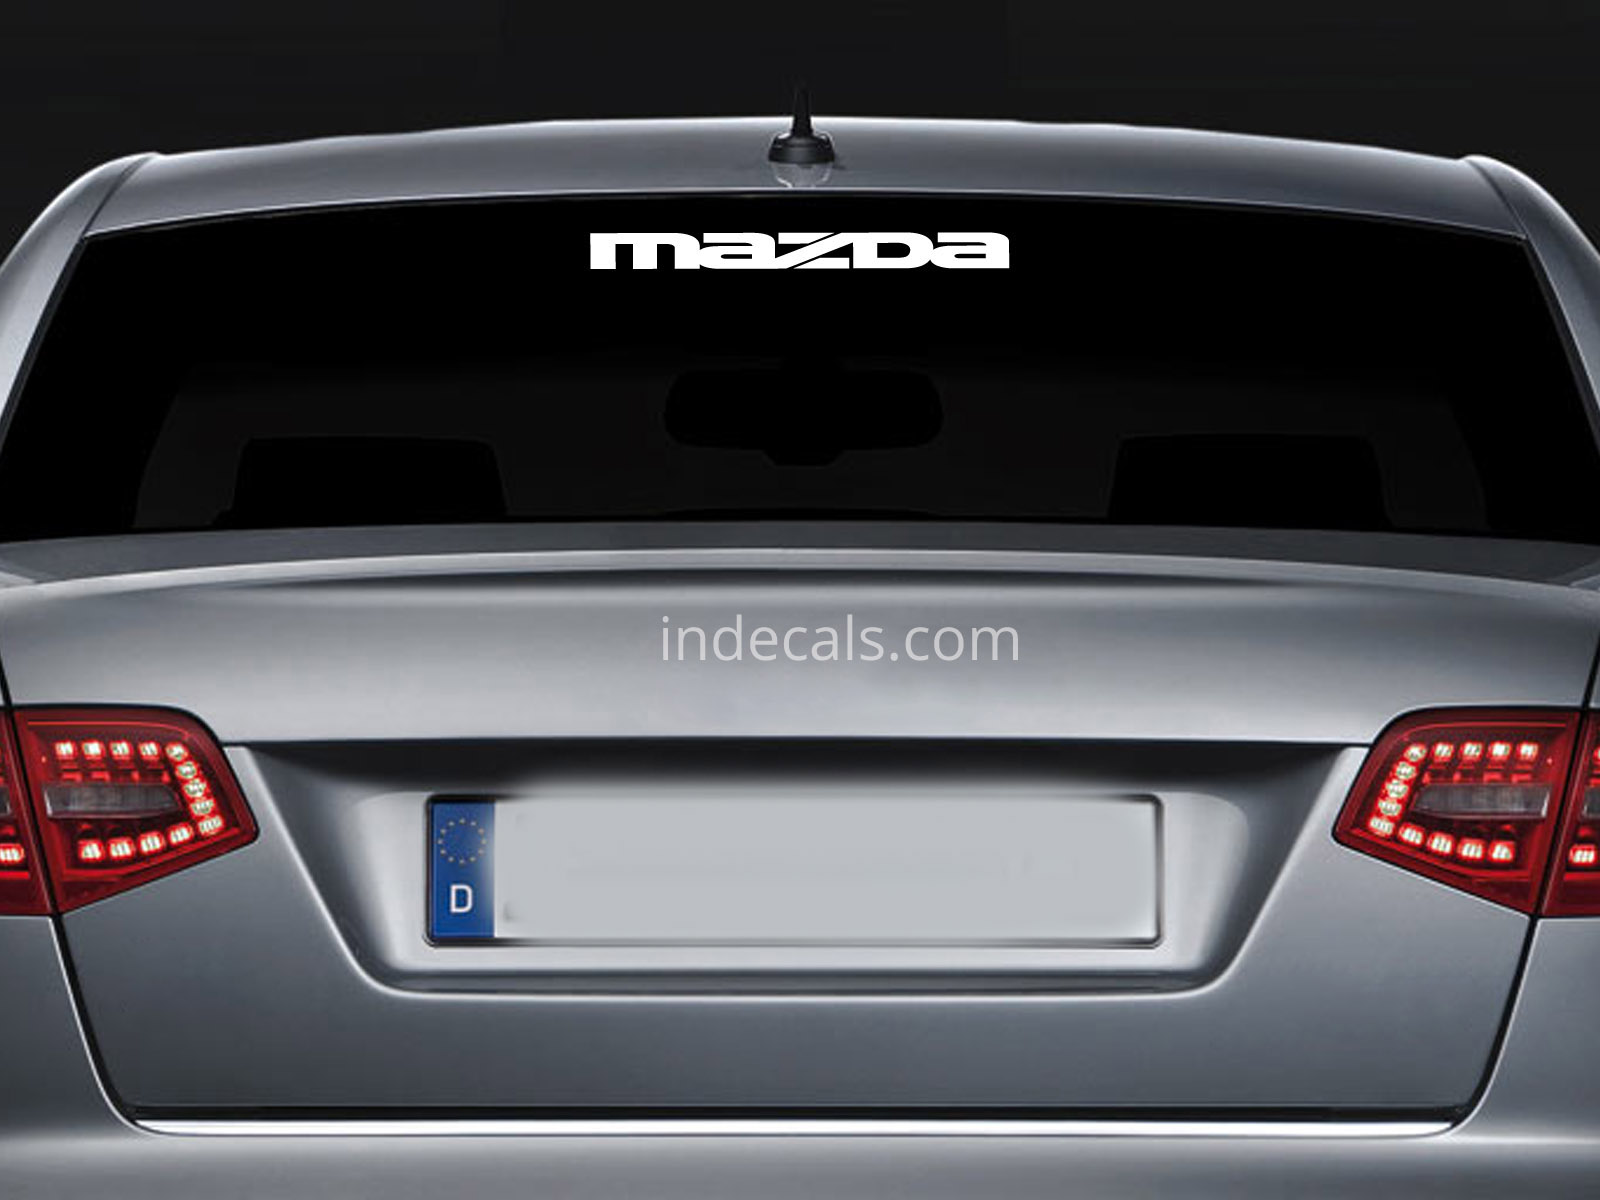 1 x Mazda Sticker for Windshield or Back Window - White